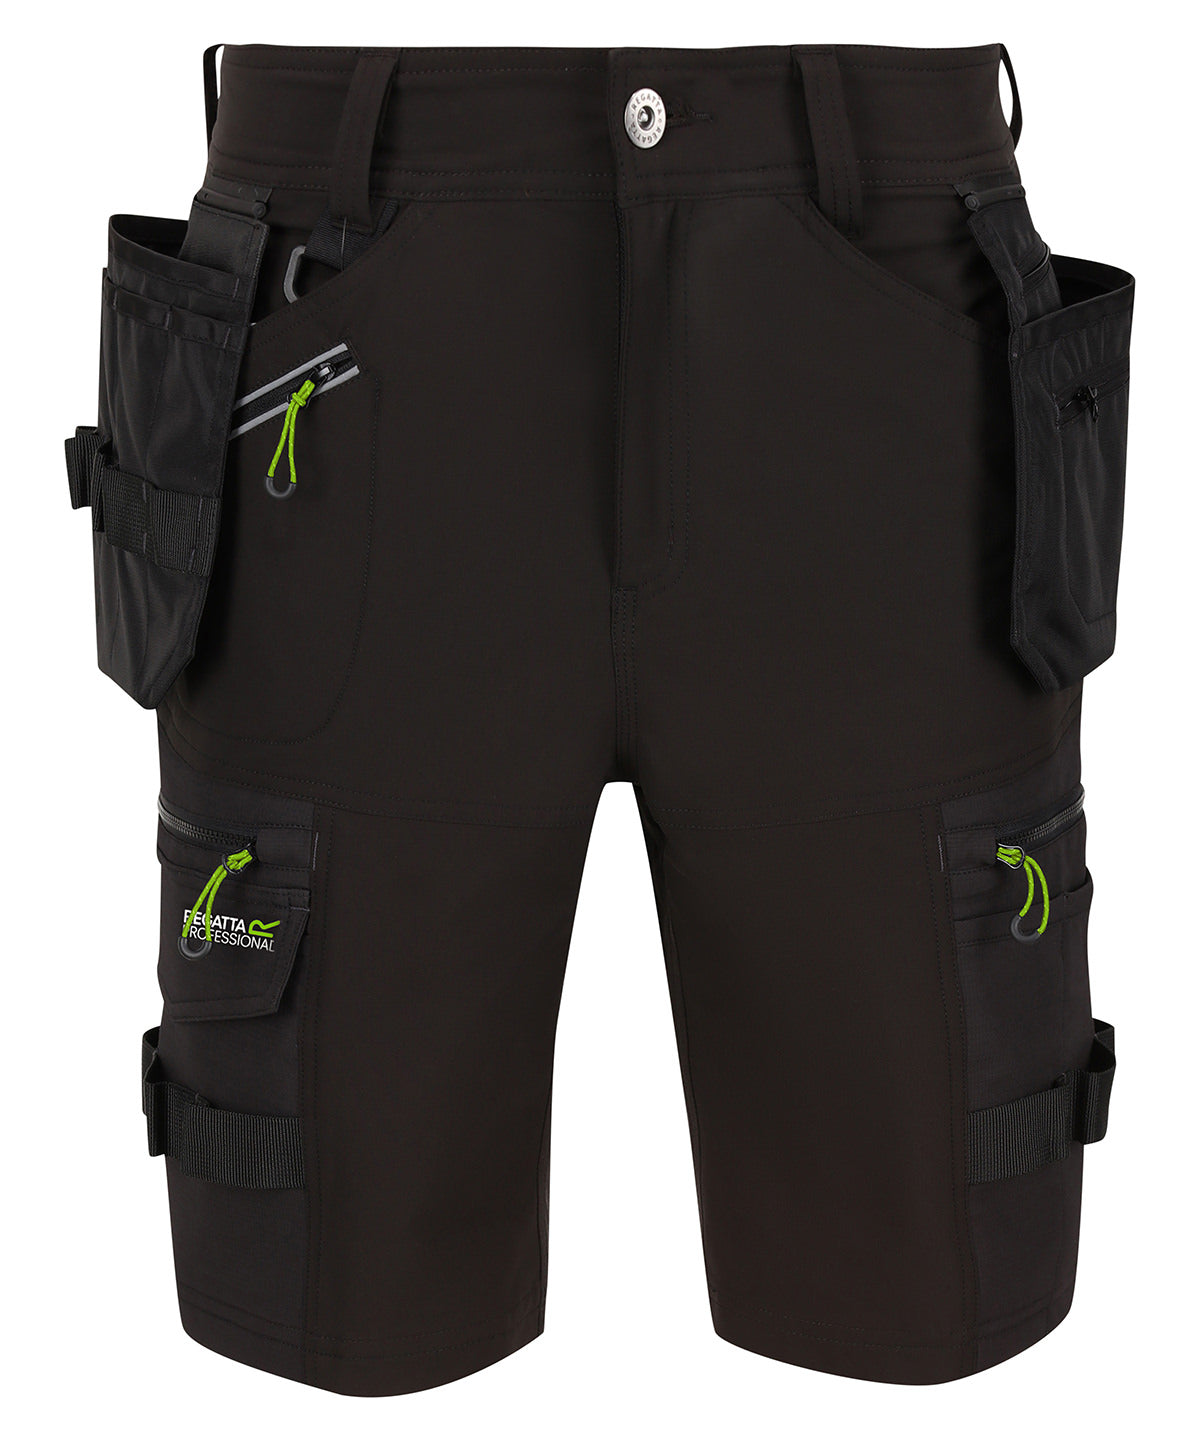 Regatta Infiltrate stretch holster shorts